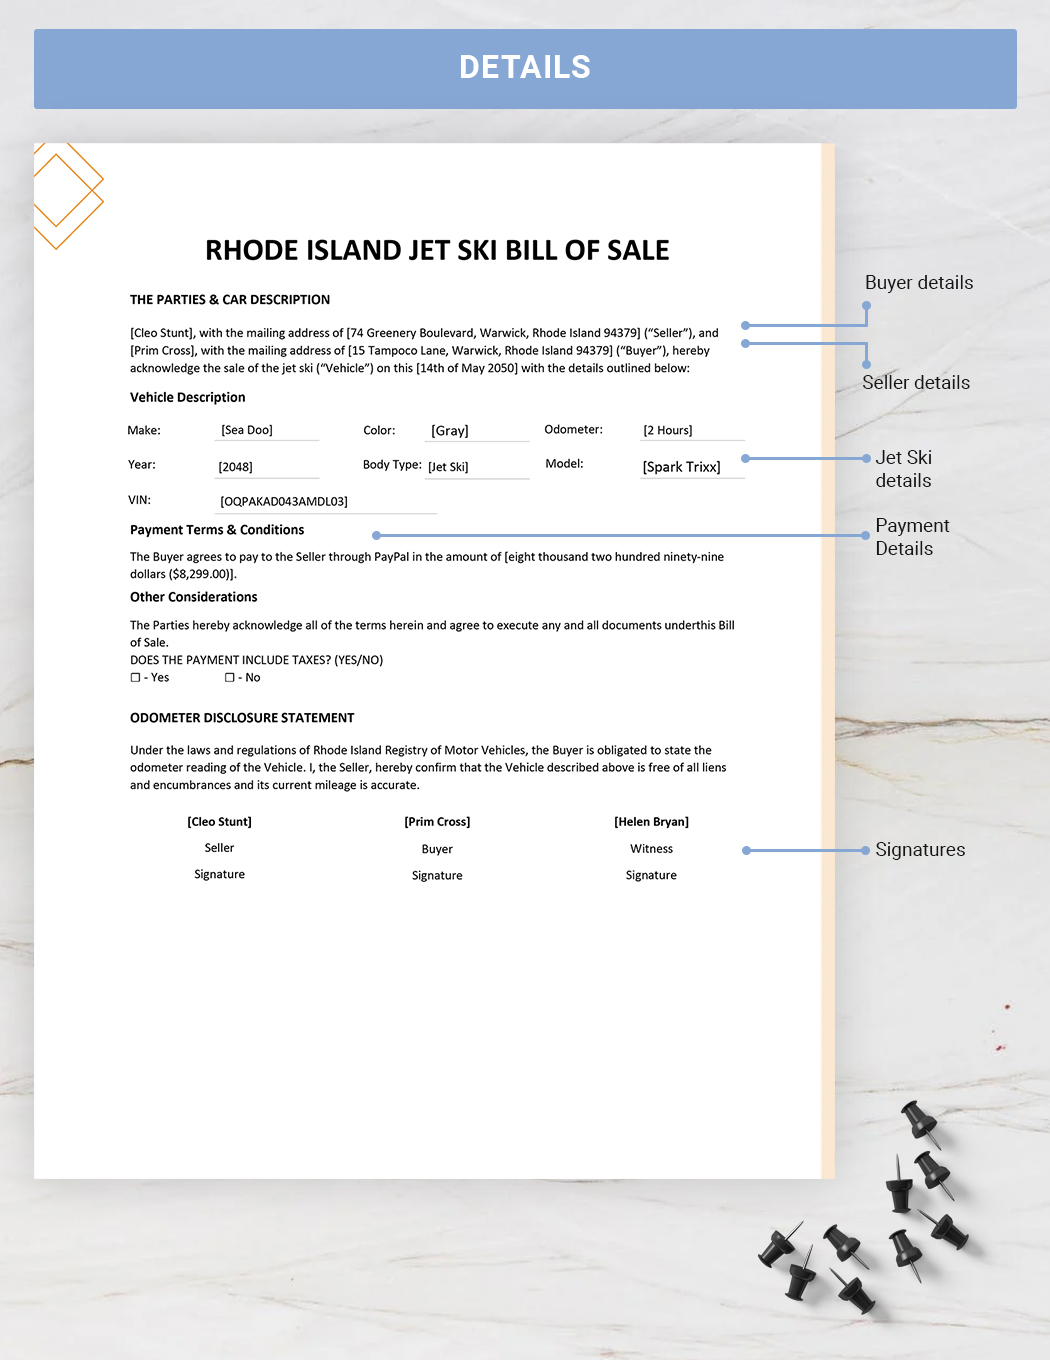 Rhode Island Jet Ski Bill of Sale Template